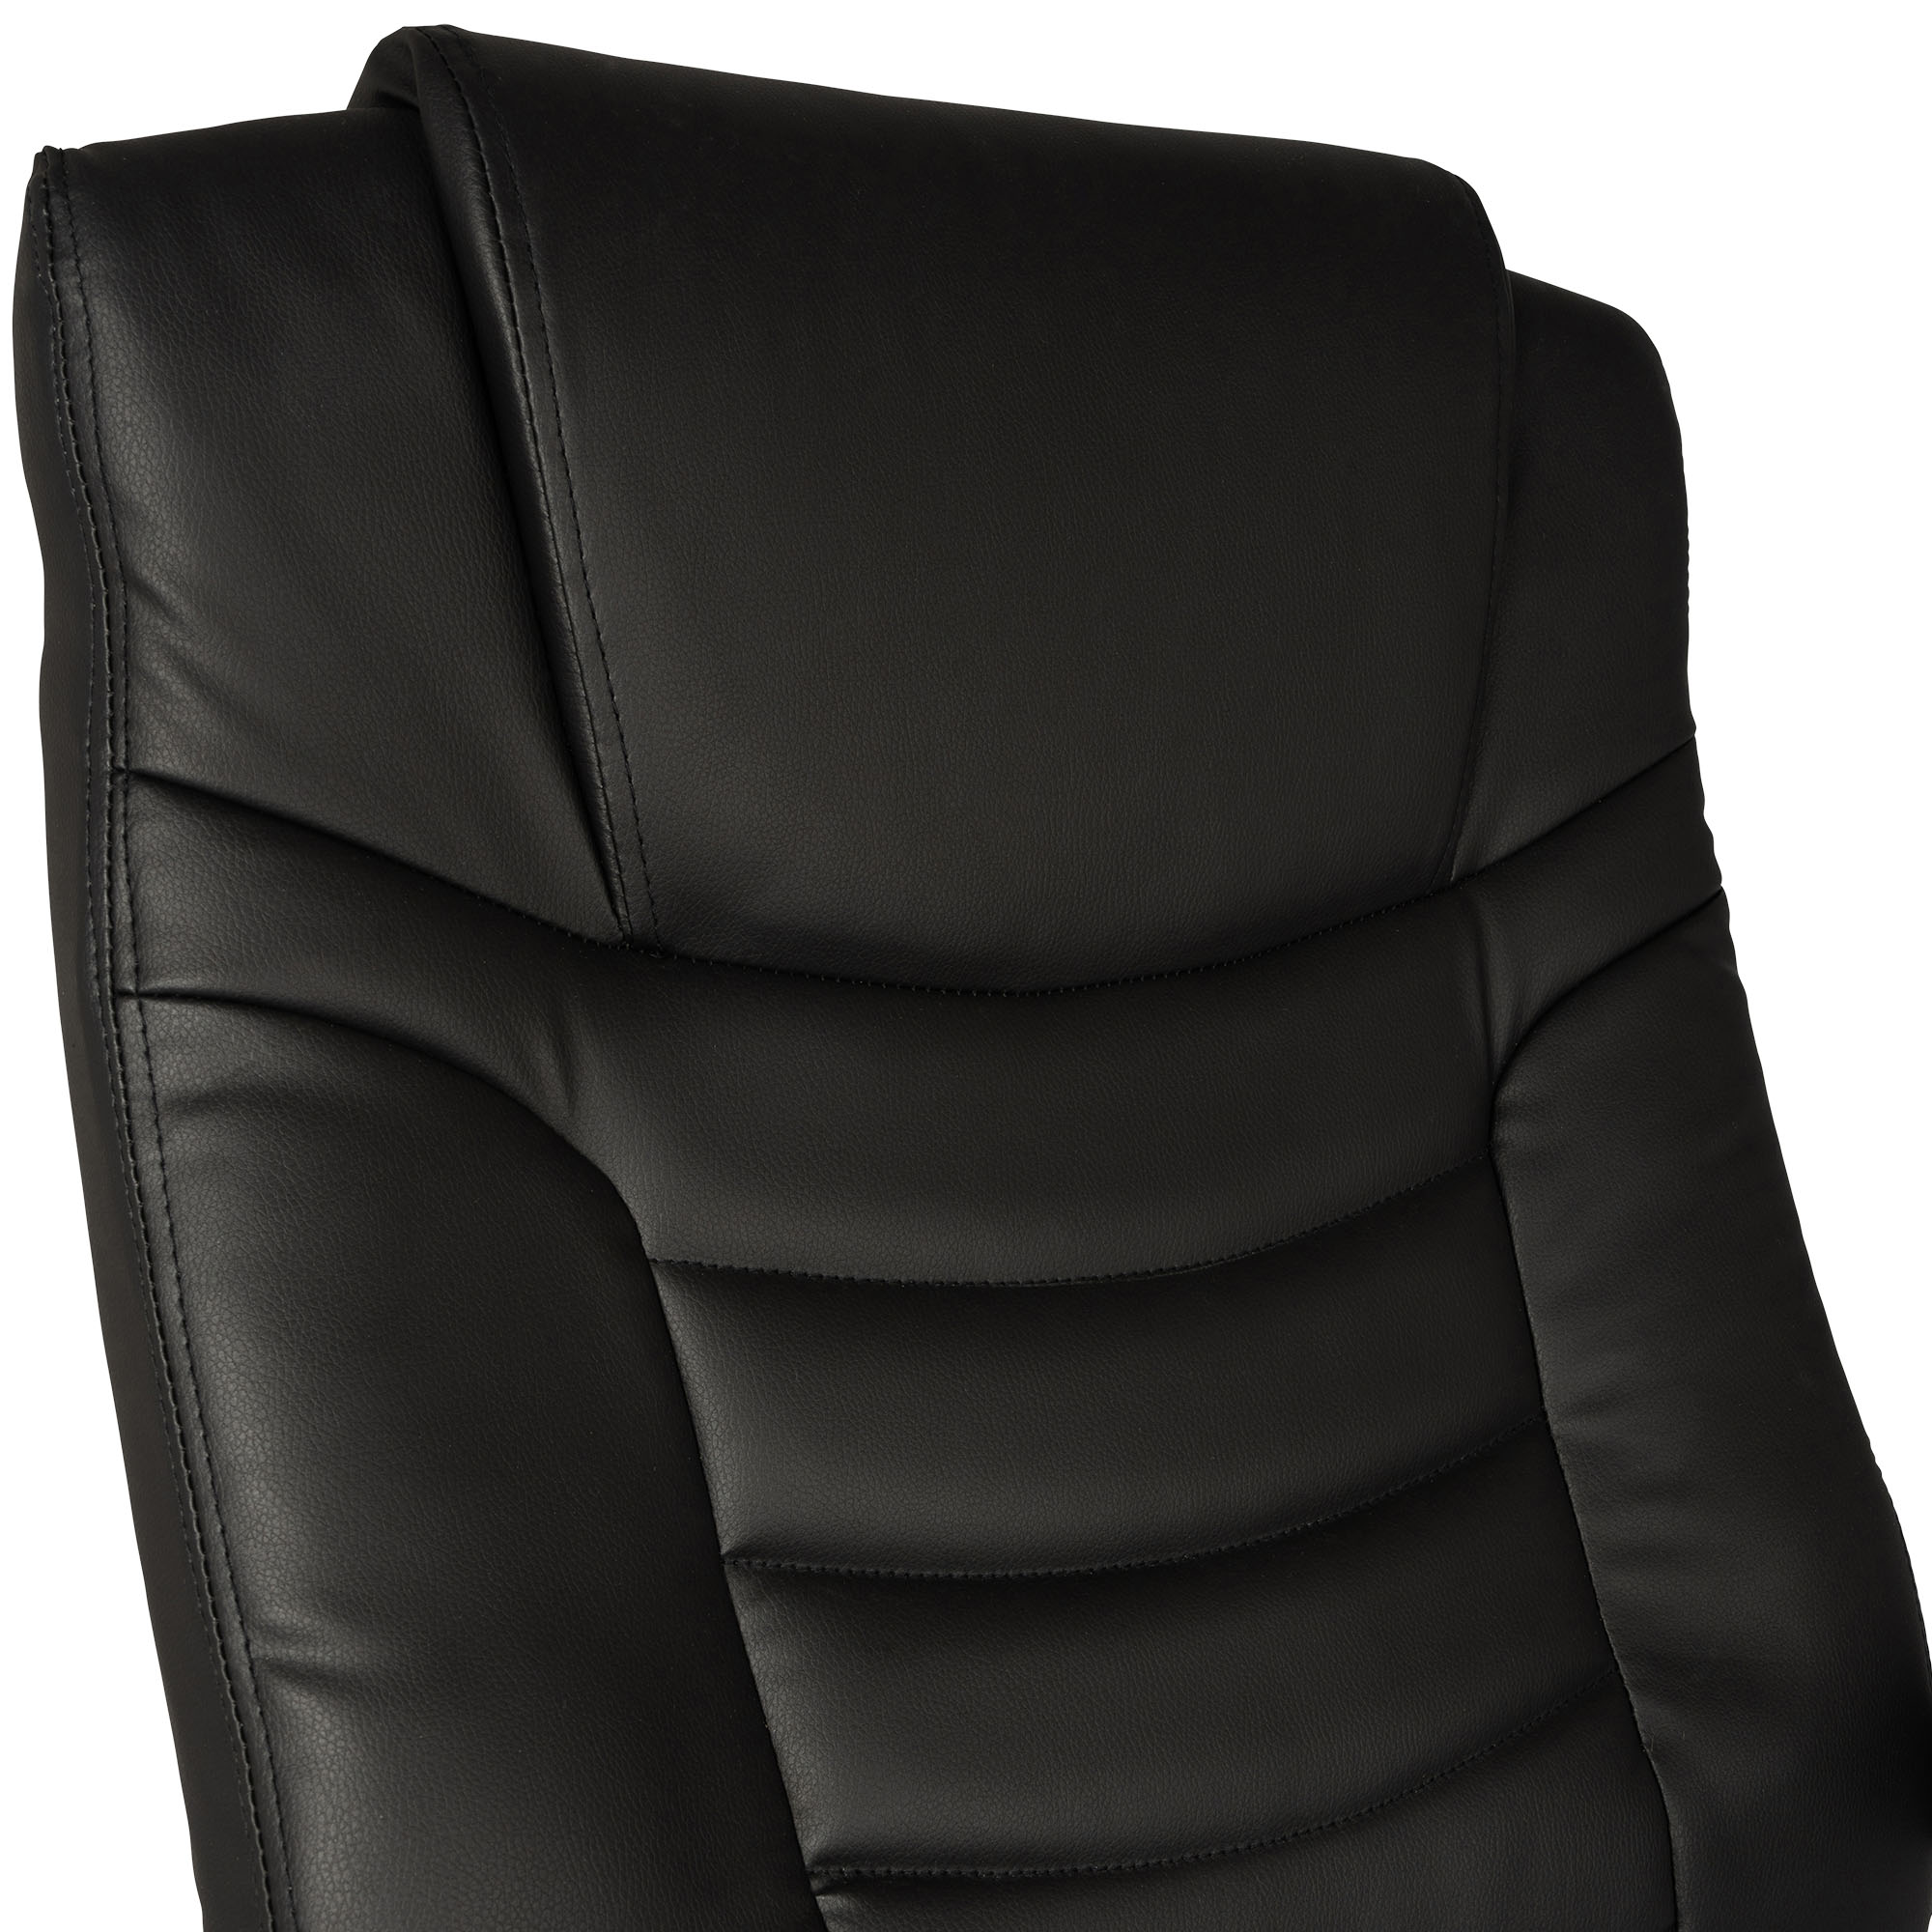 Ergodu Luxury Office Chair with High Sitting Comfort backrest